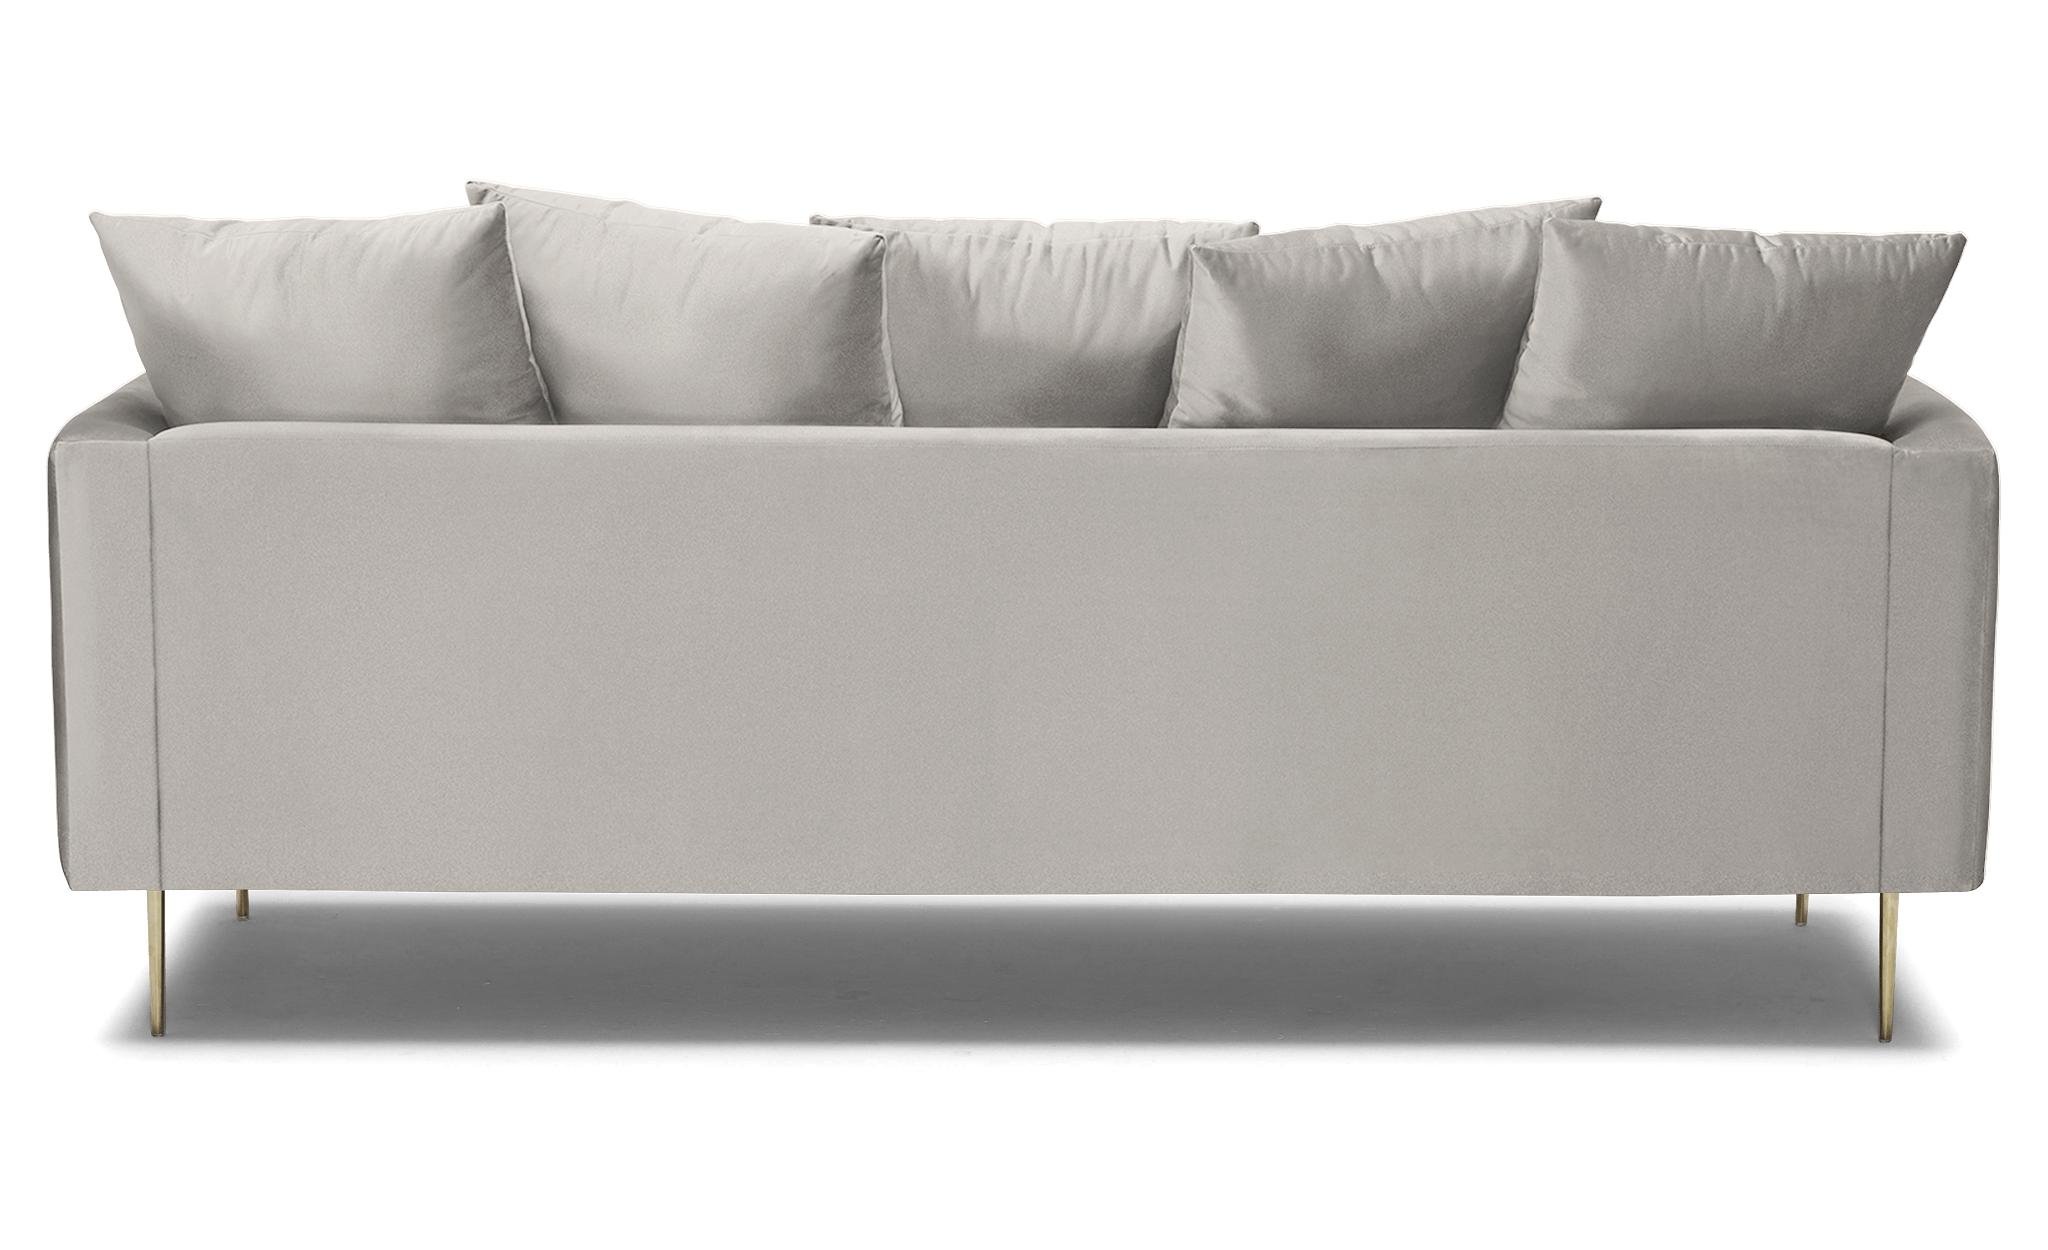 Beige/White Aime Mid Century Modern Sofa - Lucky Divine - Image 4